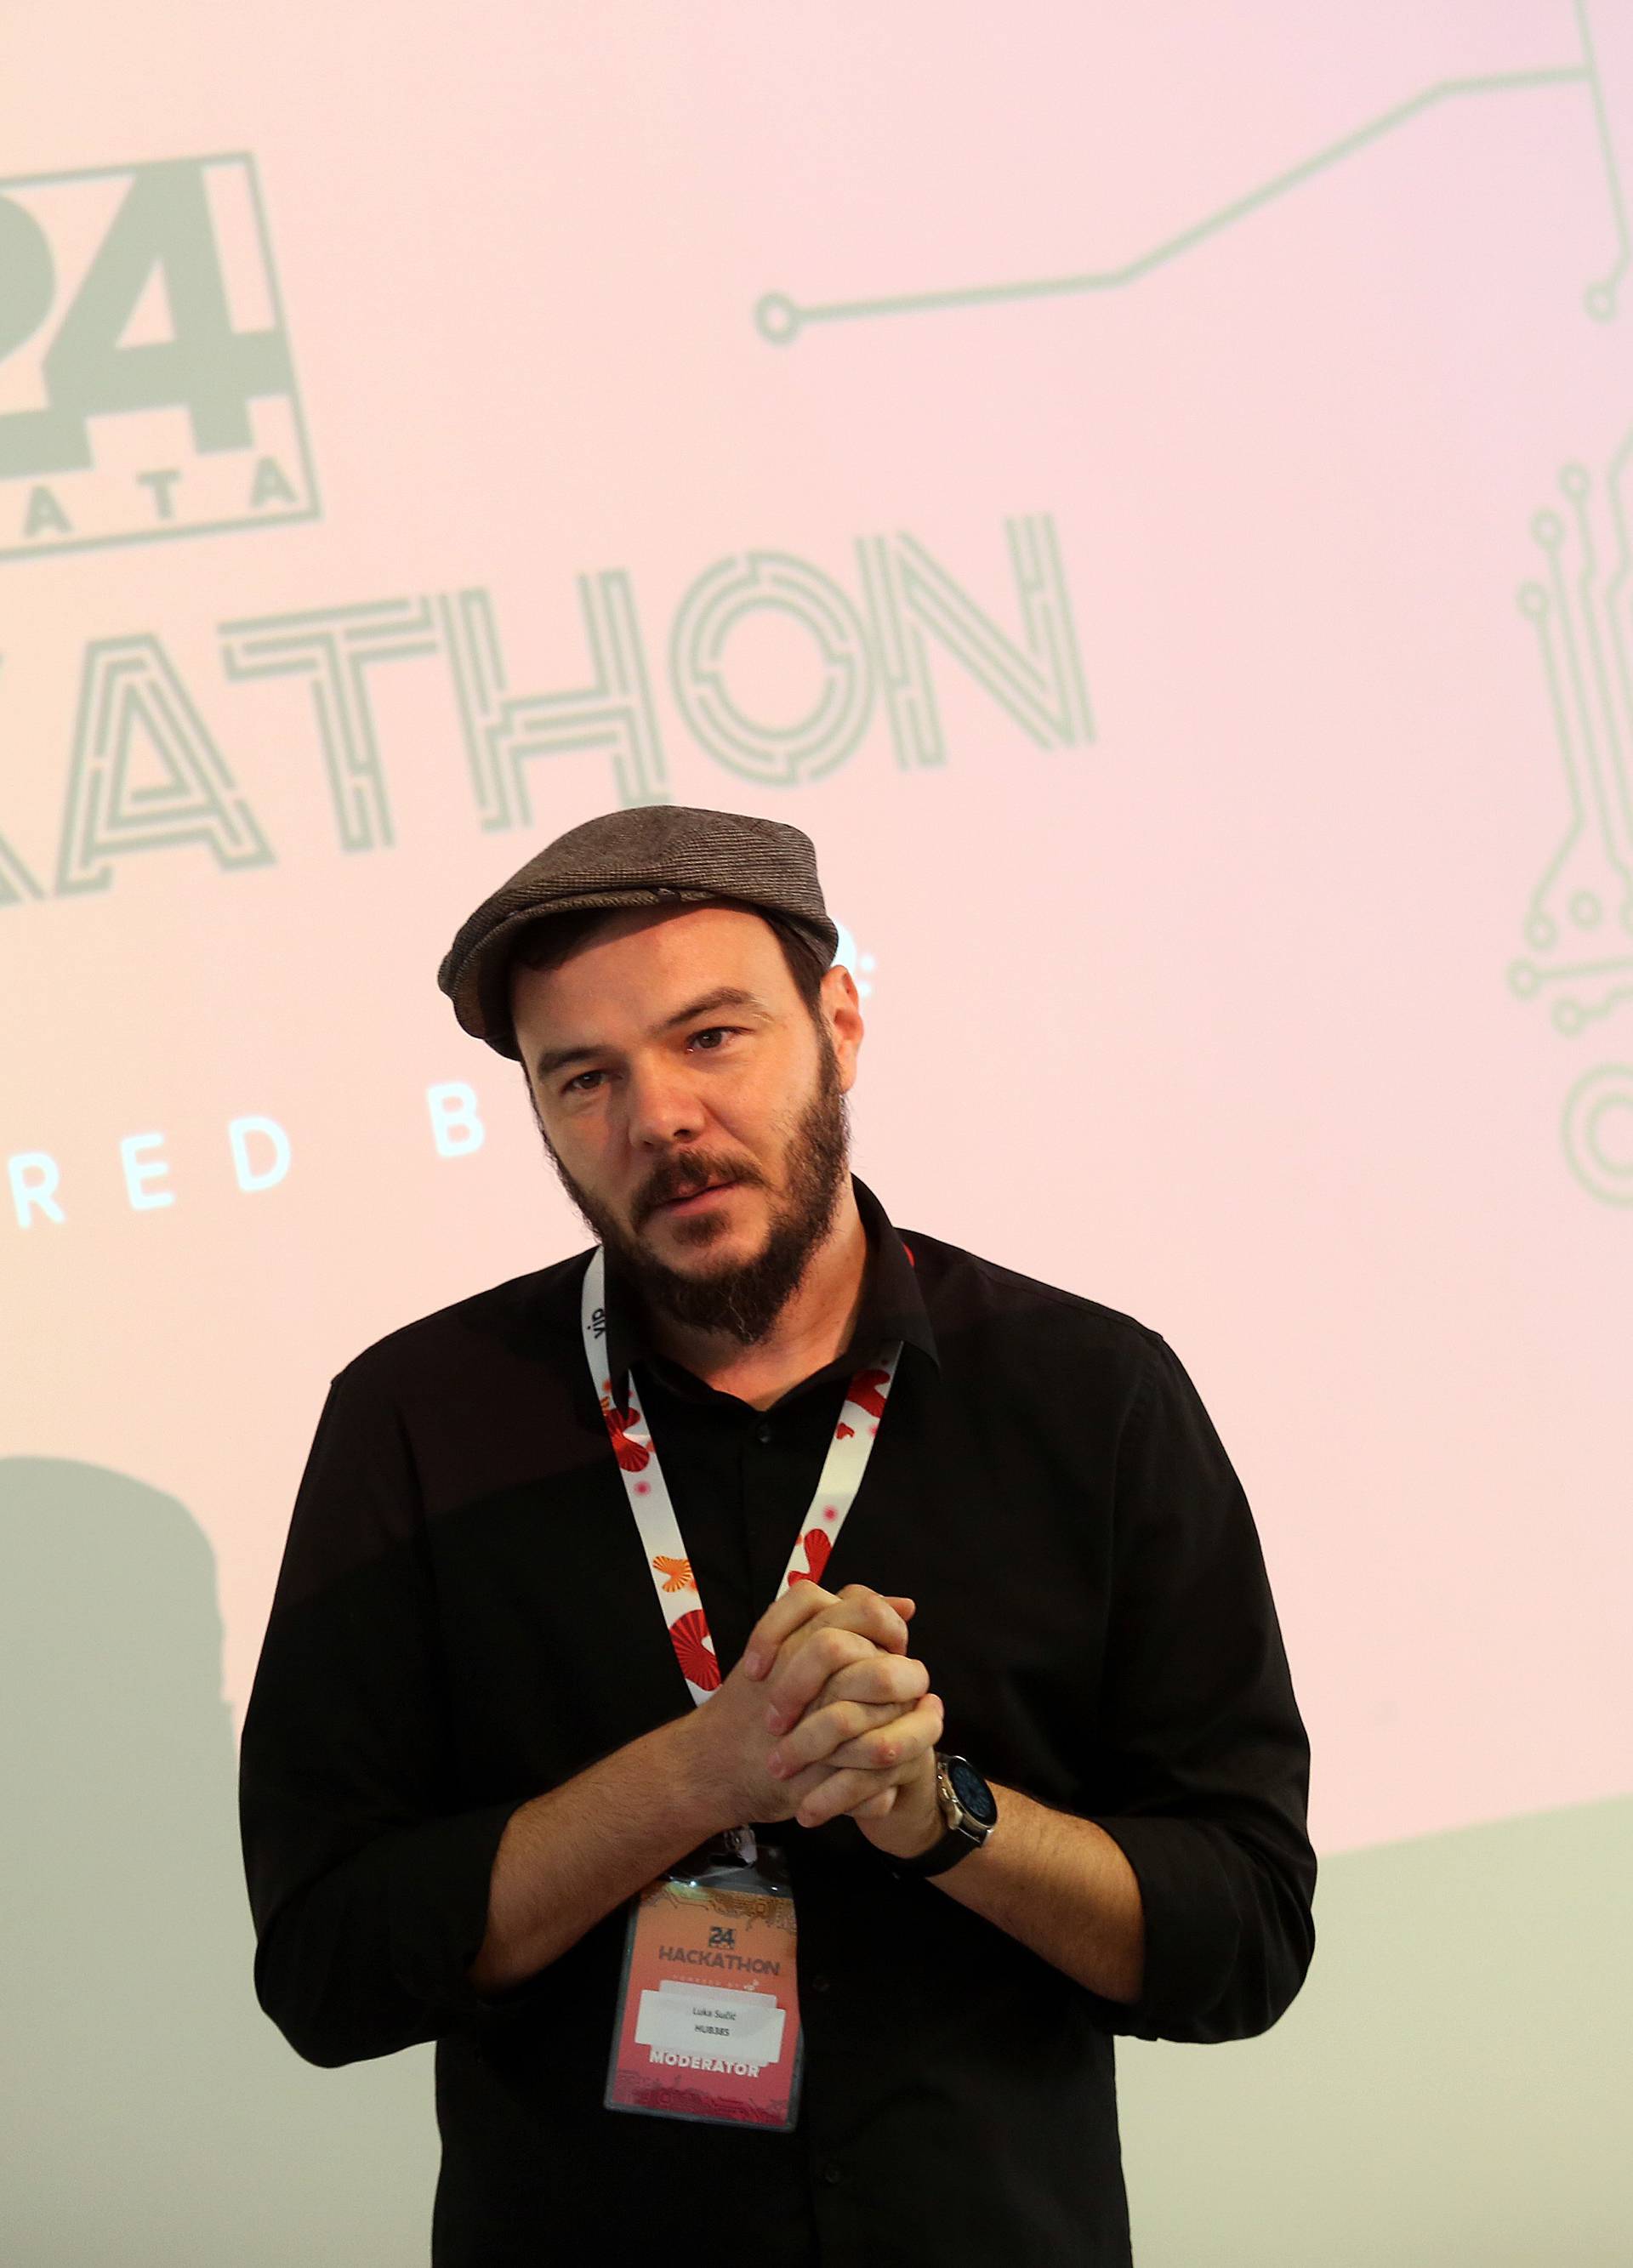 Gotov je maraton: Traži se pobjednik 24sata Hackathona